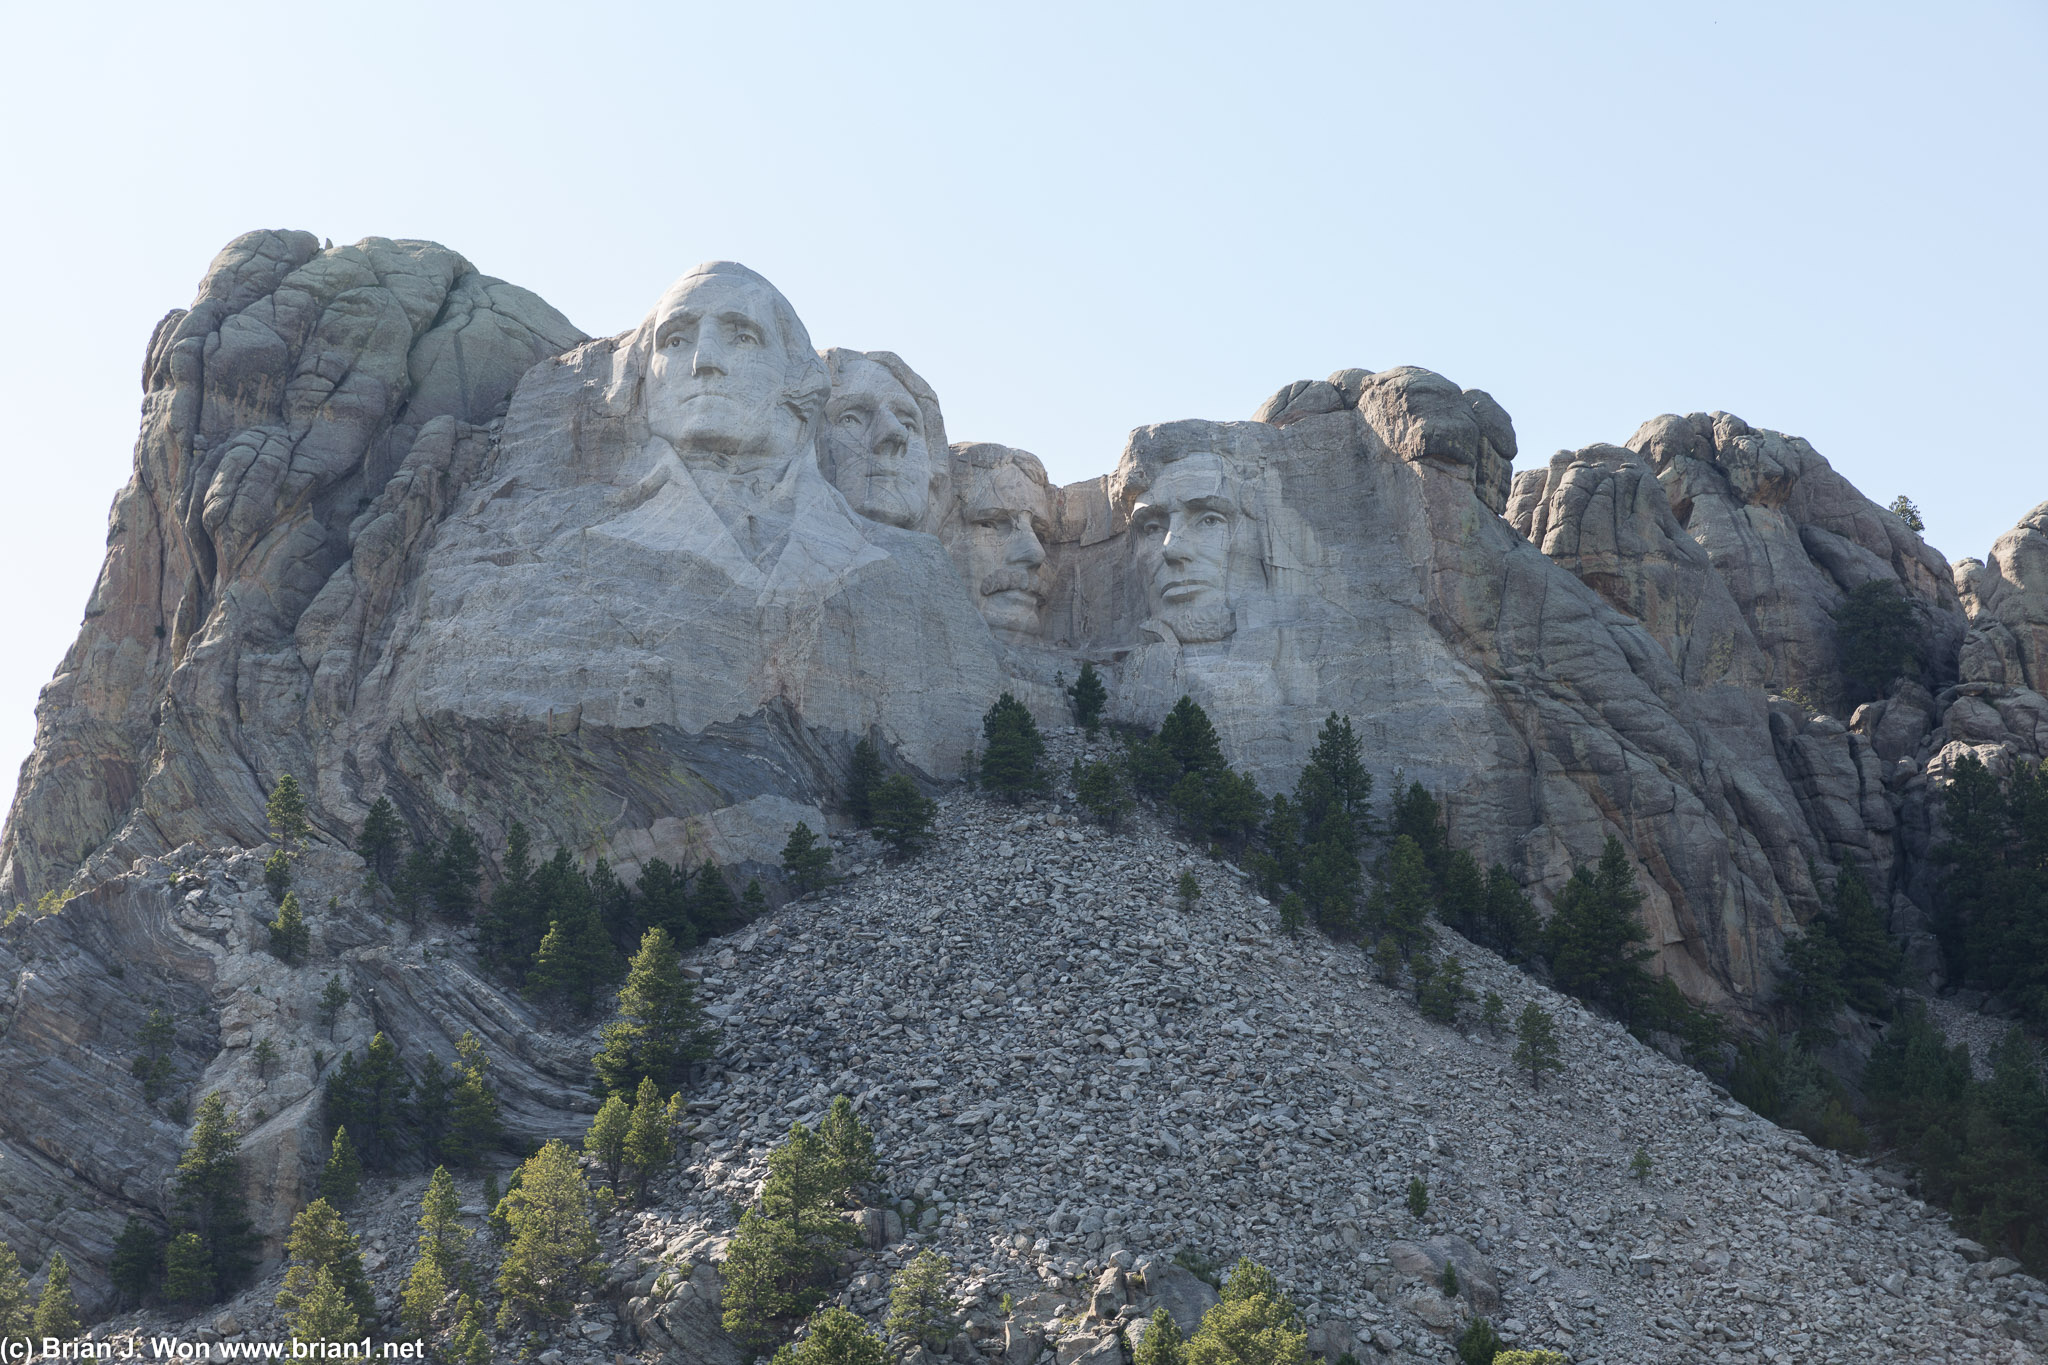 Mt. Rushmore.